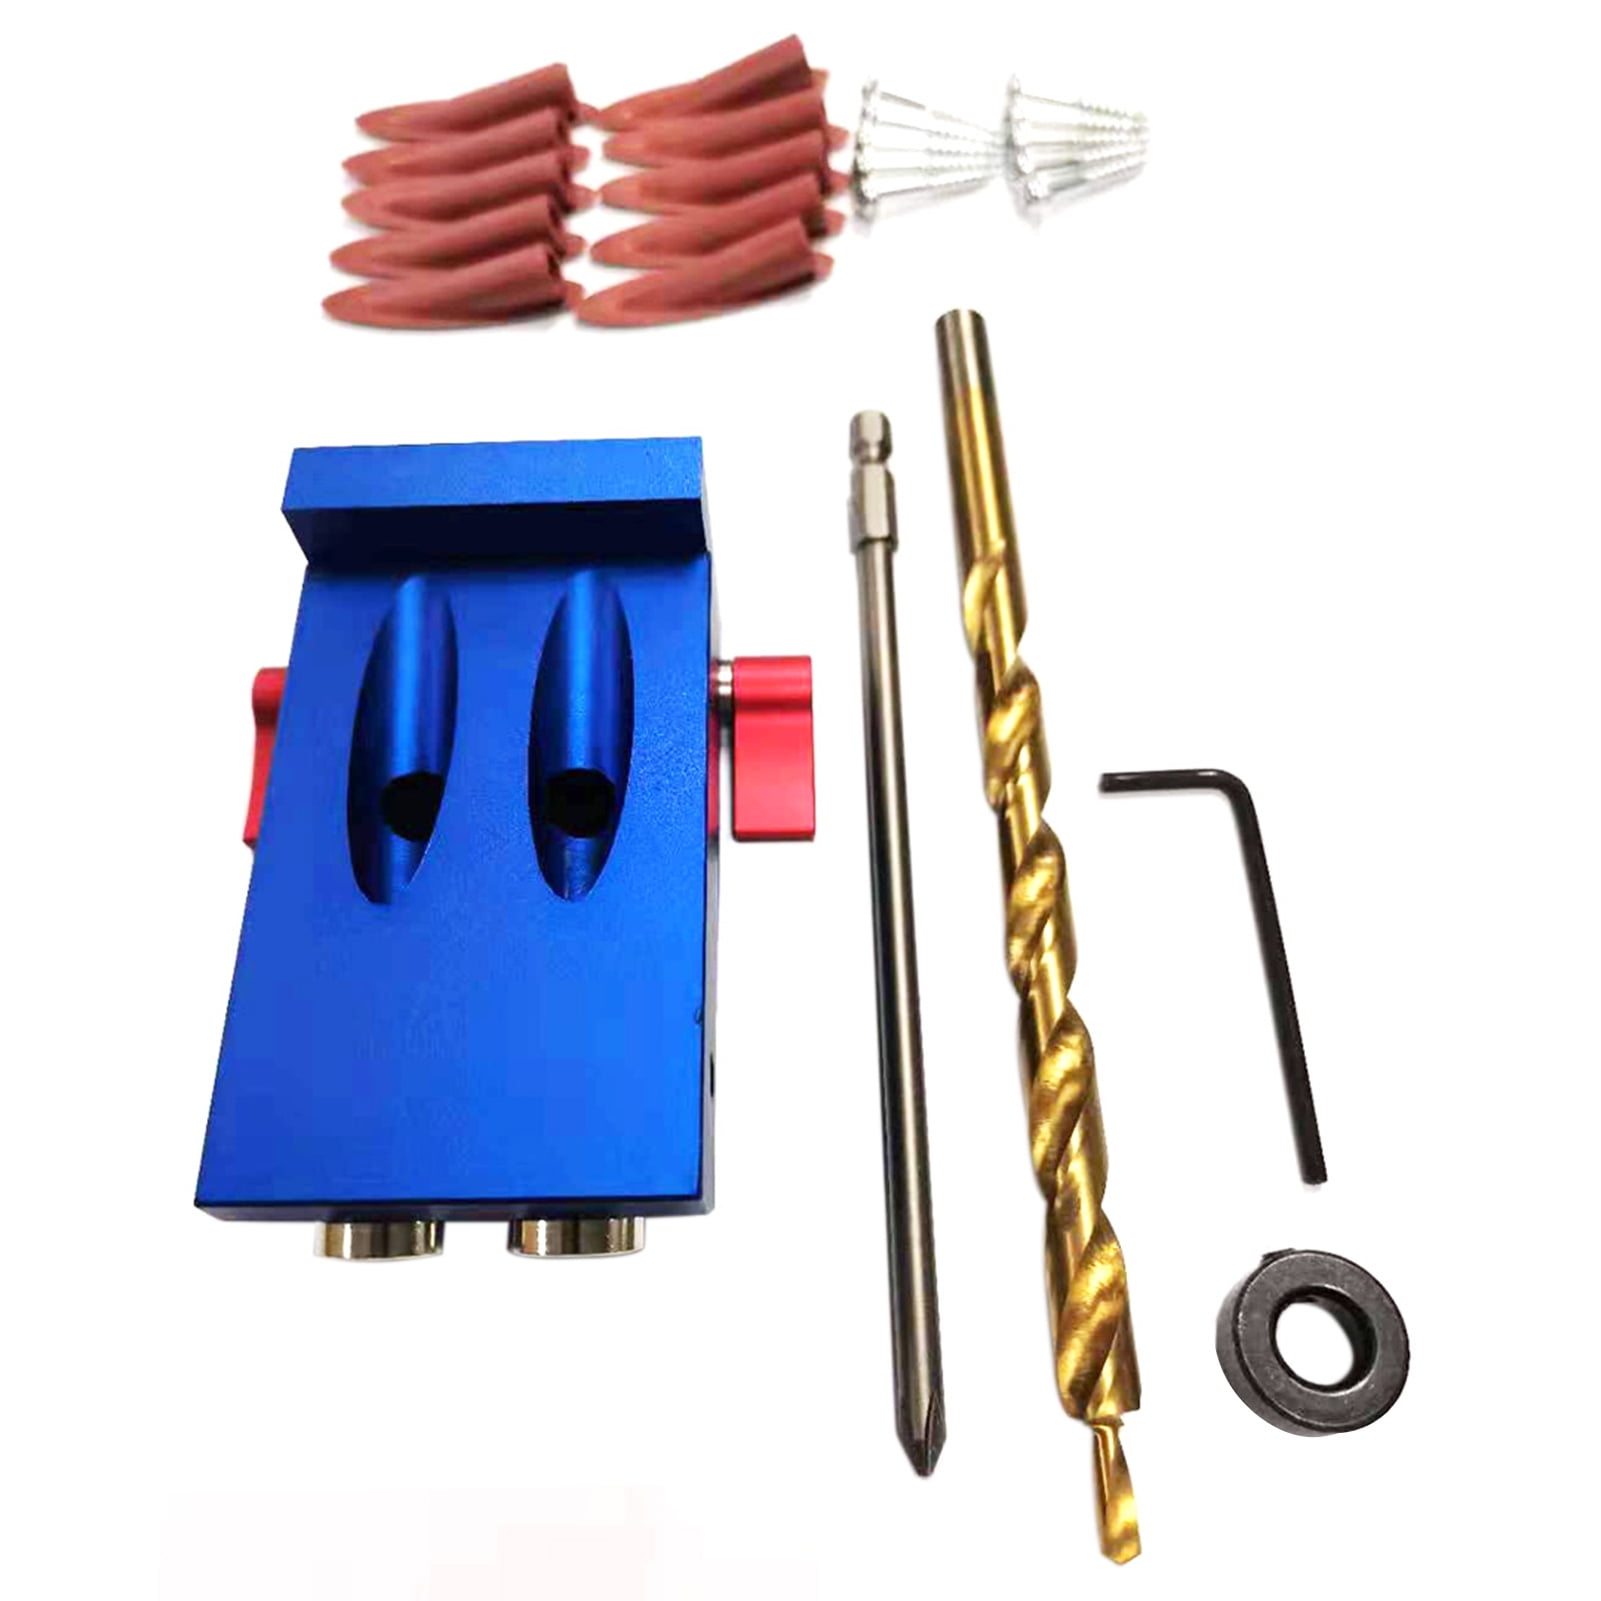 Pocket Hole Jig Kit System Kreg Style Wood Joinery Tool Set w/ Step Drill Bit UK 